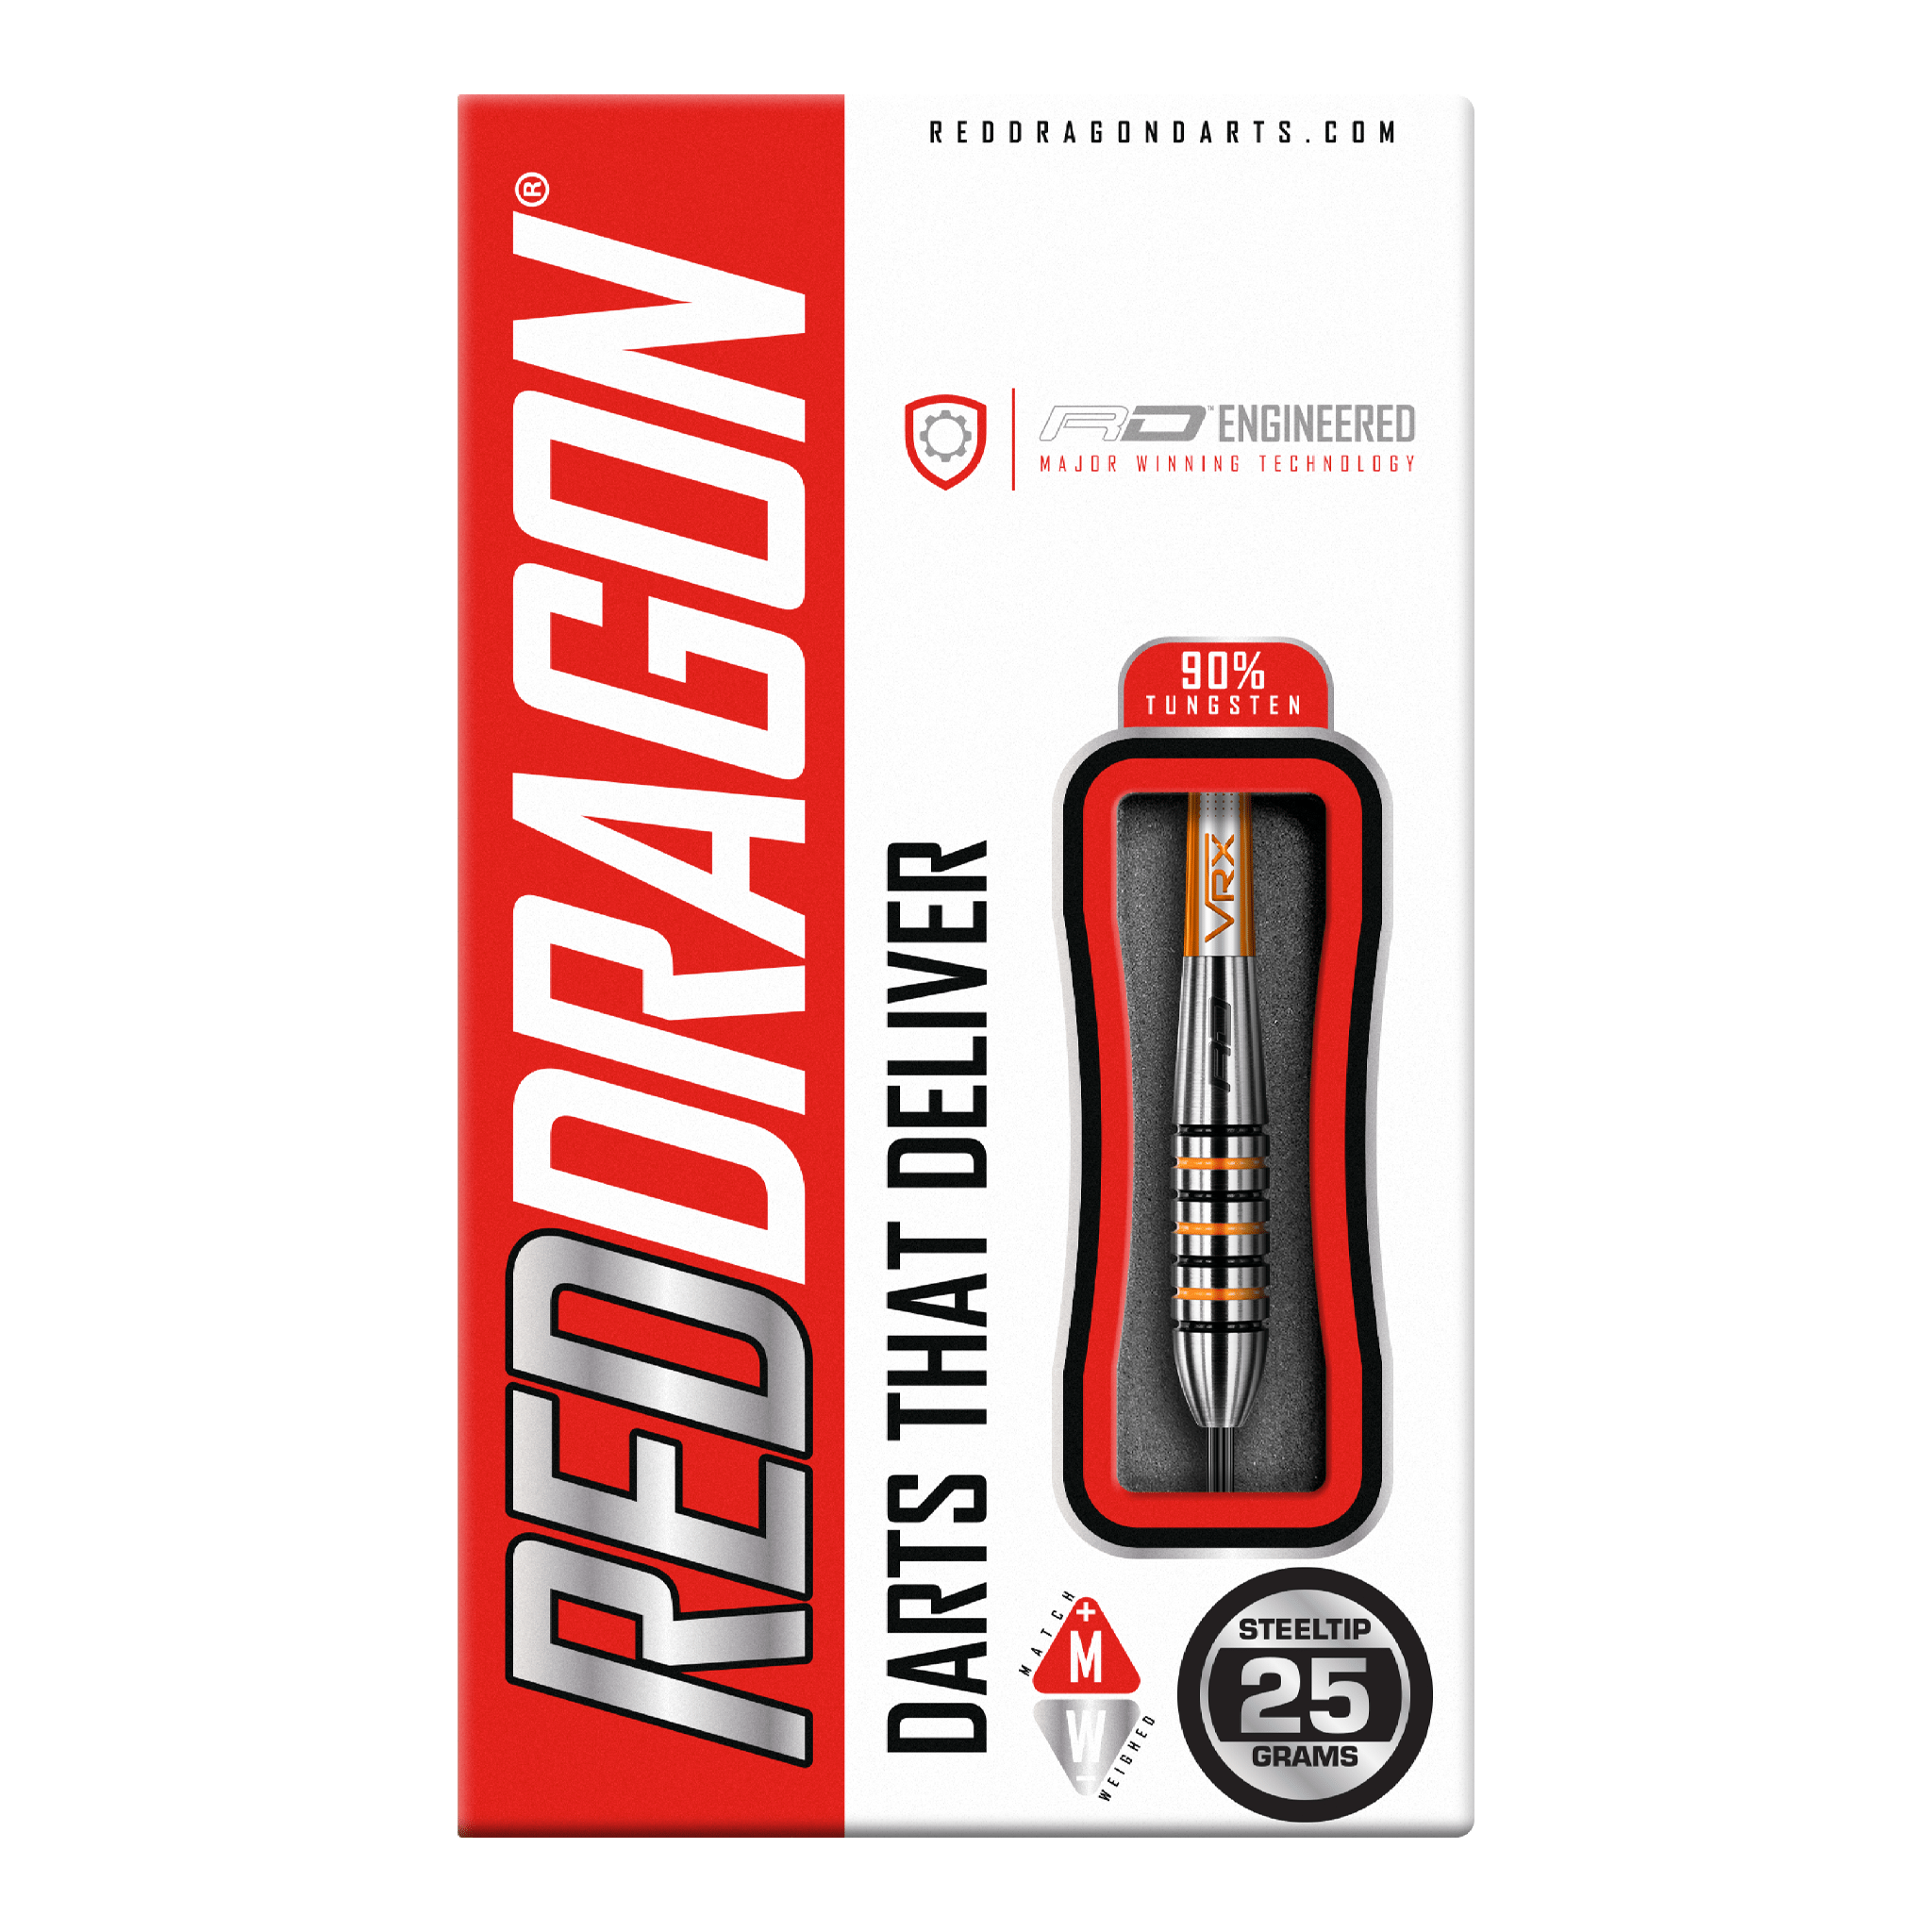 Red Dragon Amberjack 15 - 90% Tungsten Steel Tip Darts 25 Grams Darts